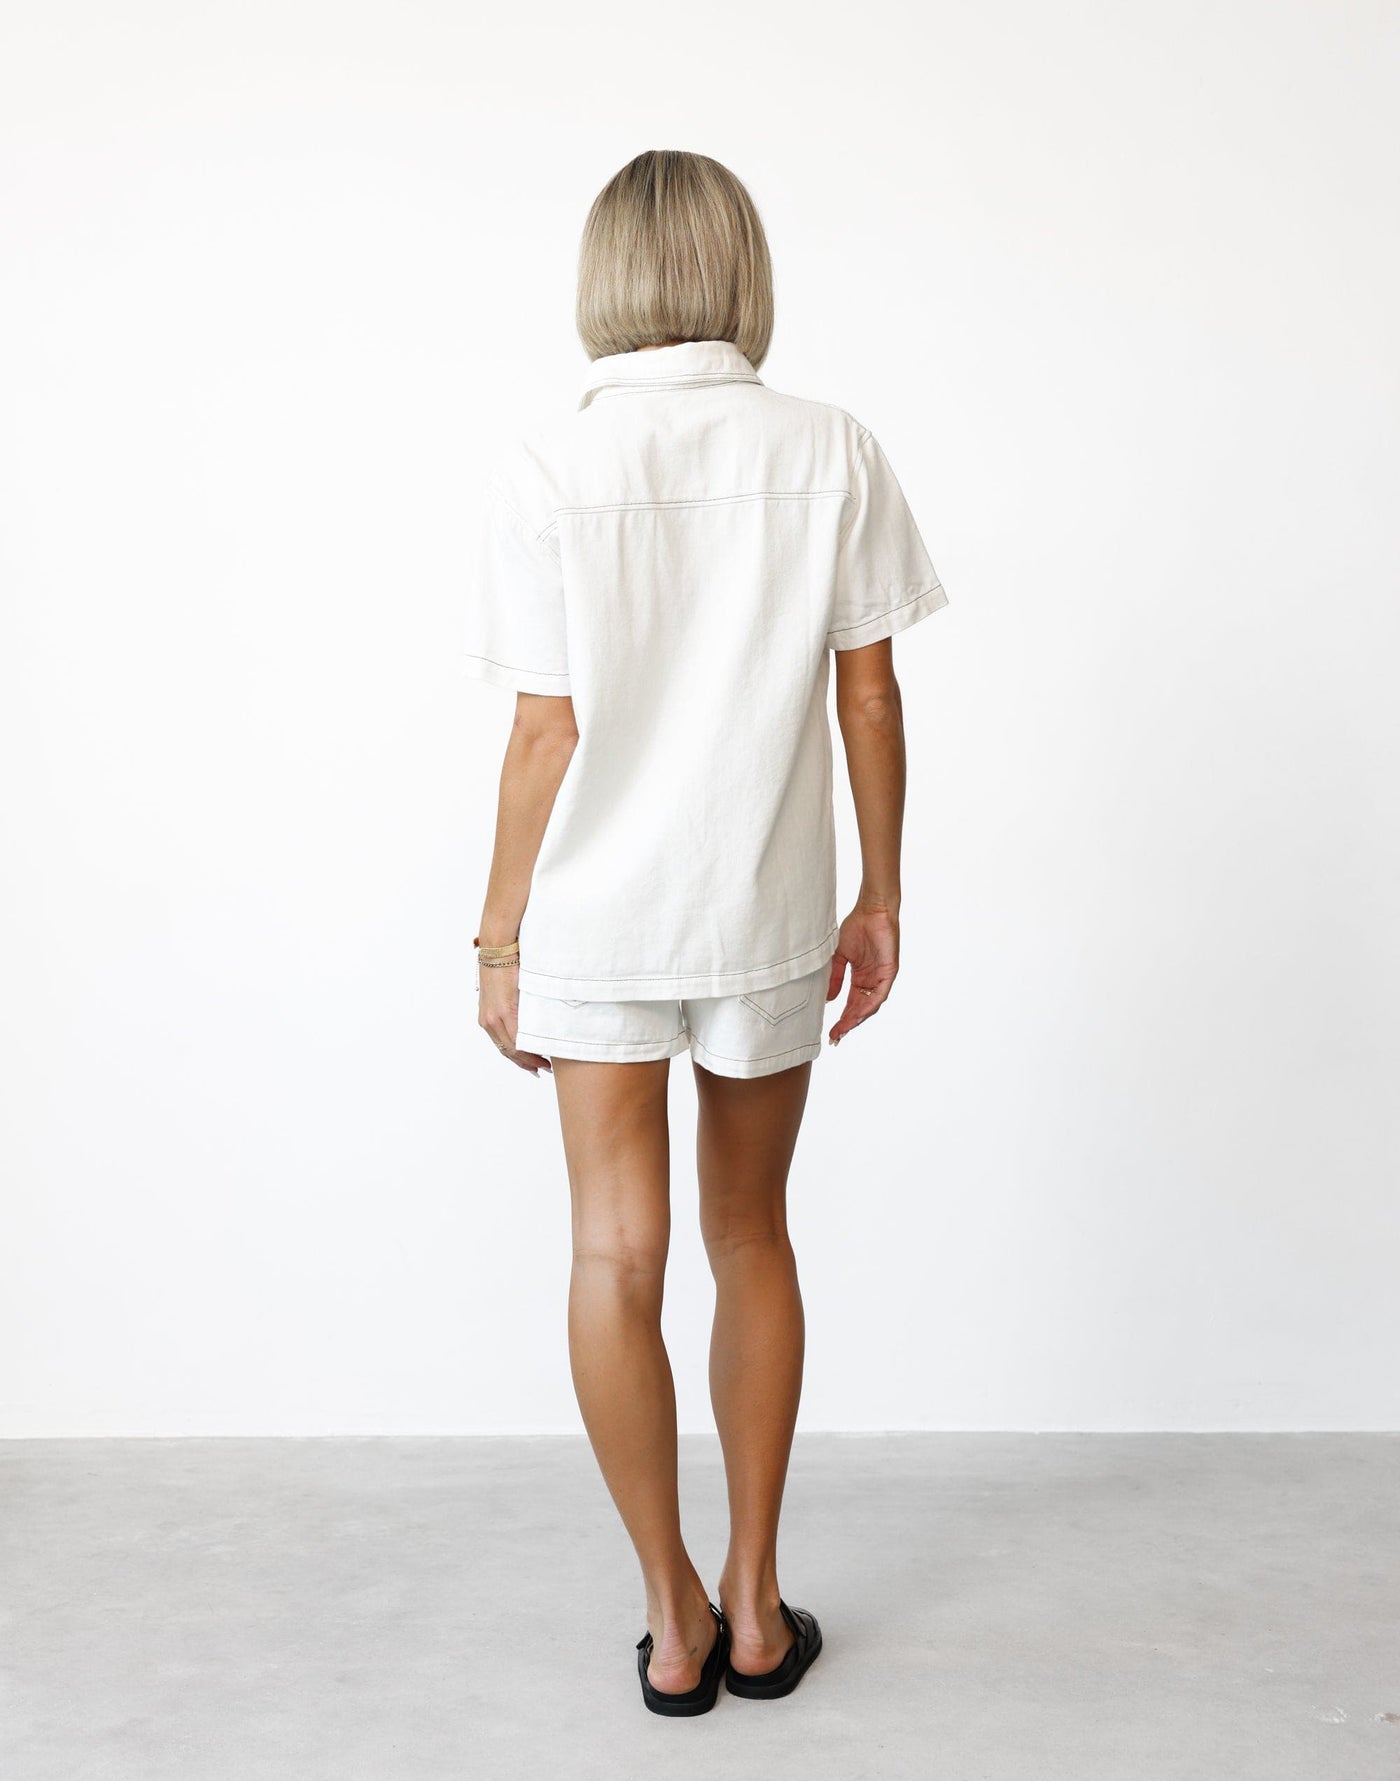 Elizha Shorts (White) - High Waisted Button Closure Denim Shorts - Women's Shorts - Charcoal Clothing